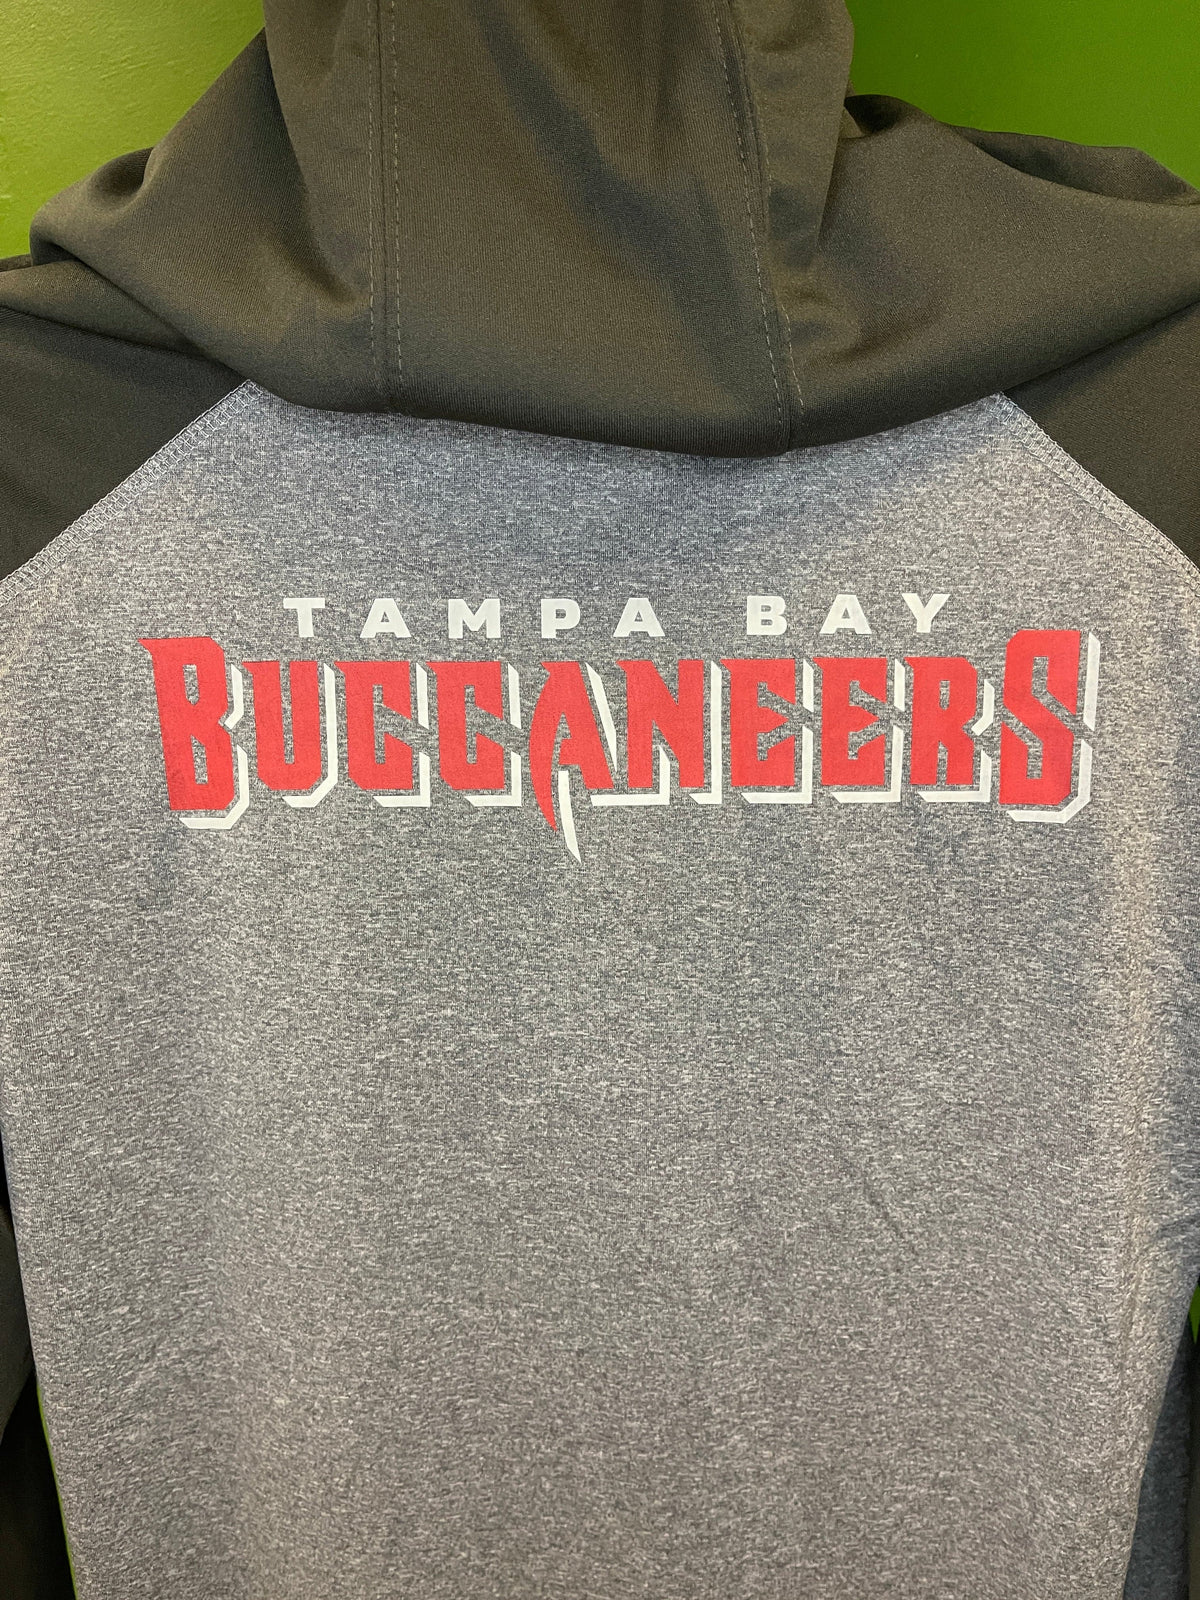 NFL Tampa Bay Buccaneers 1/4 Zip Hooded L/S T-Shirt Men's Medium NWT